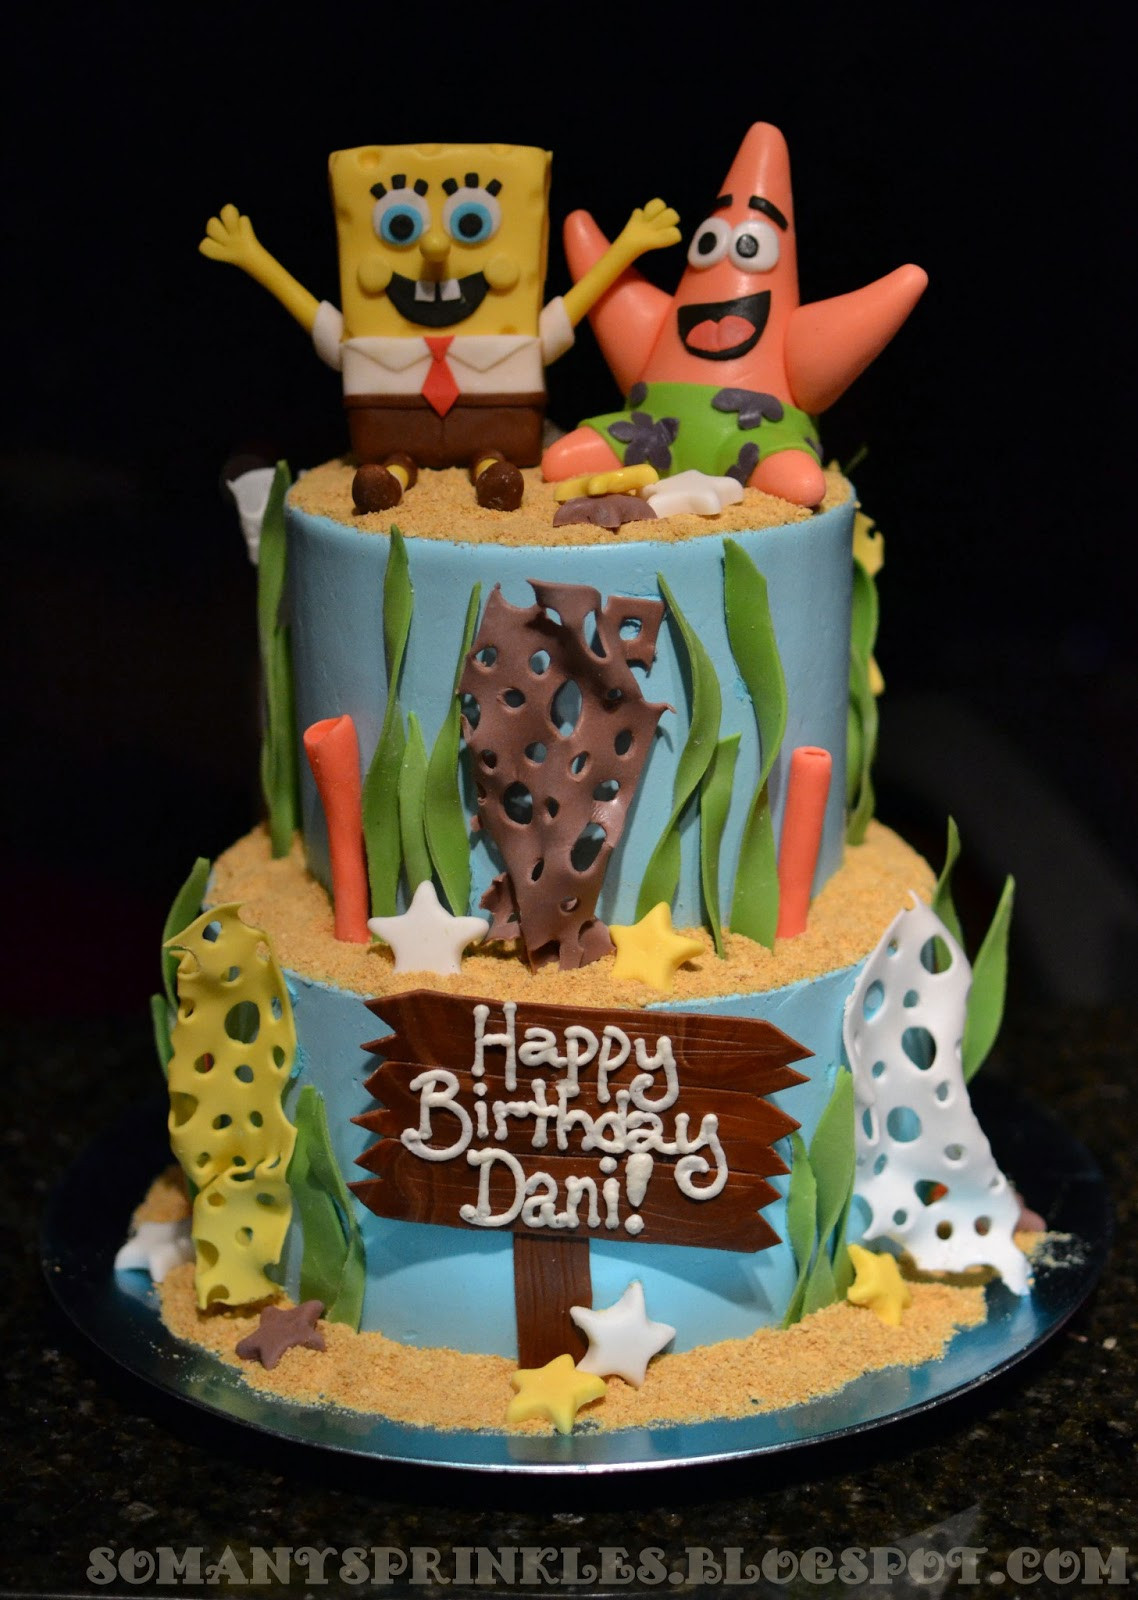 Best ideas about Spongebob Birthday Cake
. Save or Pin So Many Sprinkles Spongebob Birthday Cake Now.